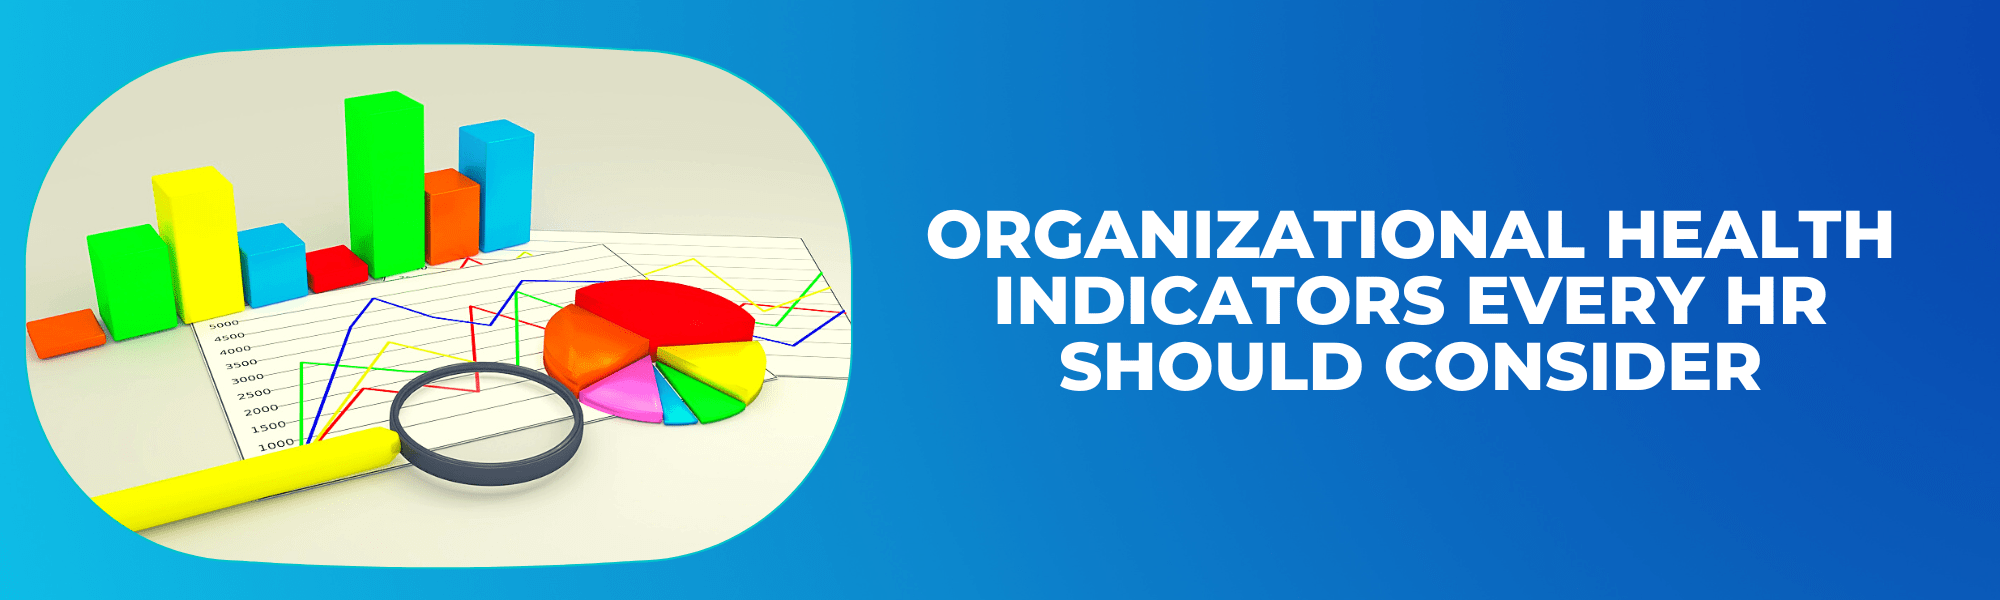 Organizational Health Indicators Every HR Should Consider